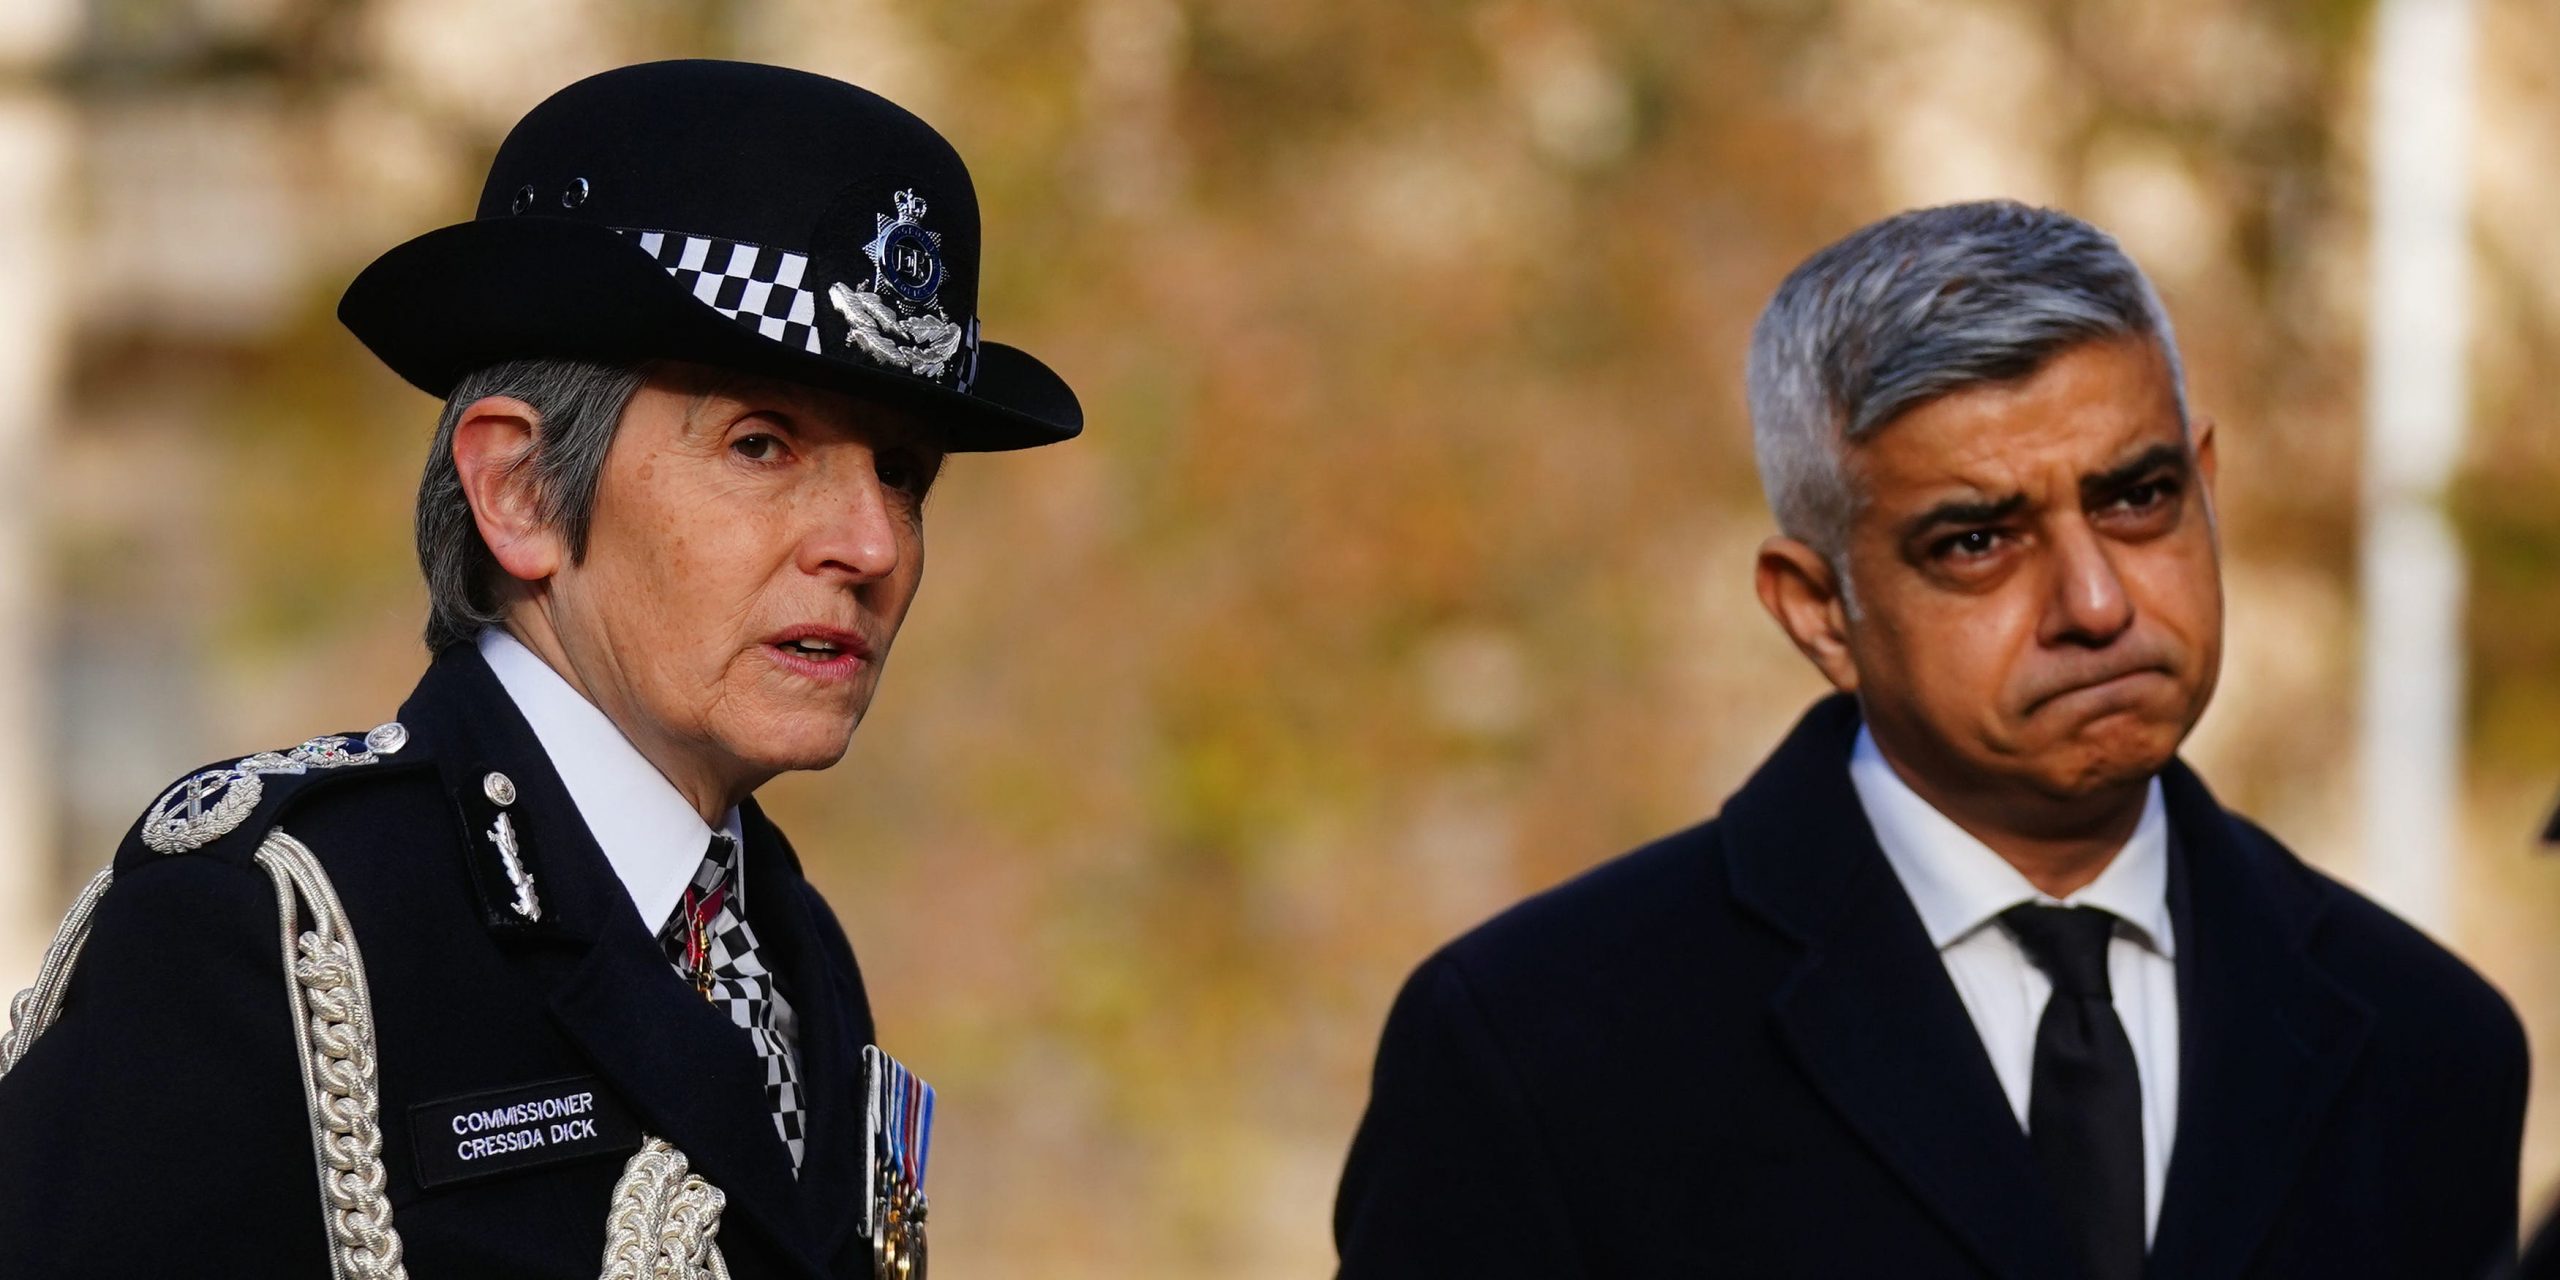 Metropolitan Police Commissioner Dame Cressida Dick with Mayor of London Sadiq Khan on November 29, 2021 in London, England.